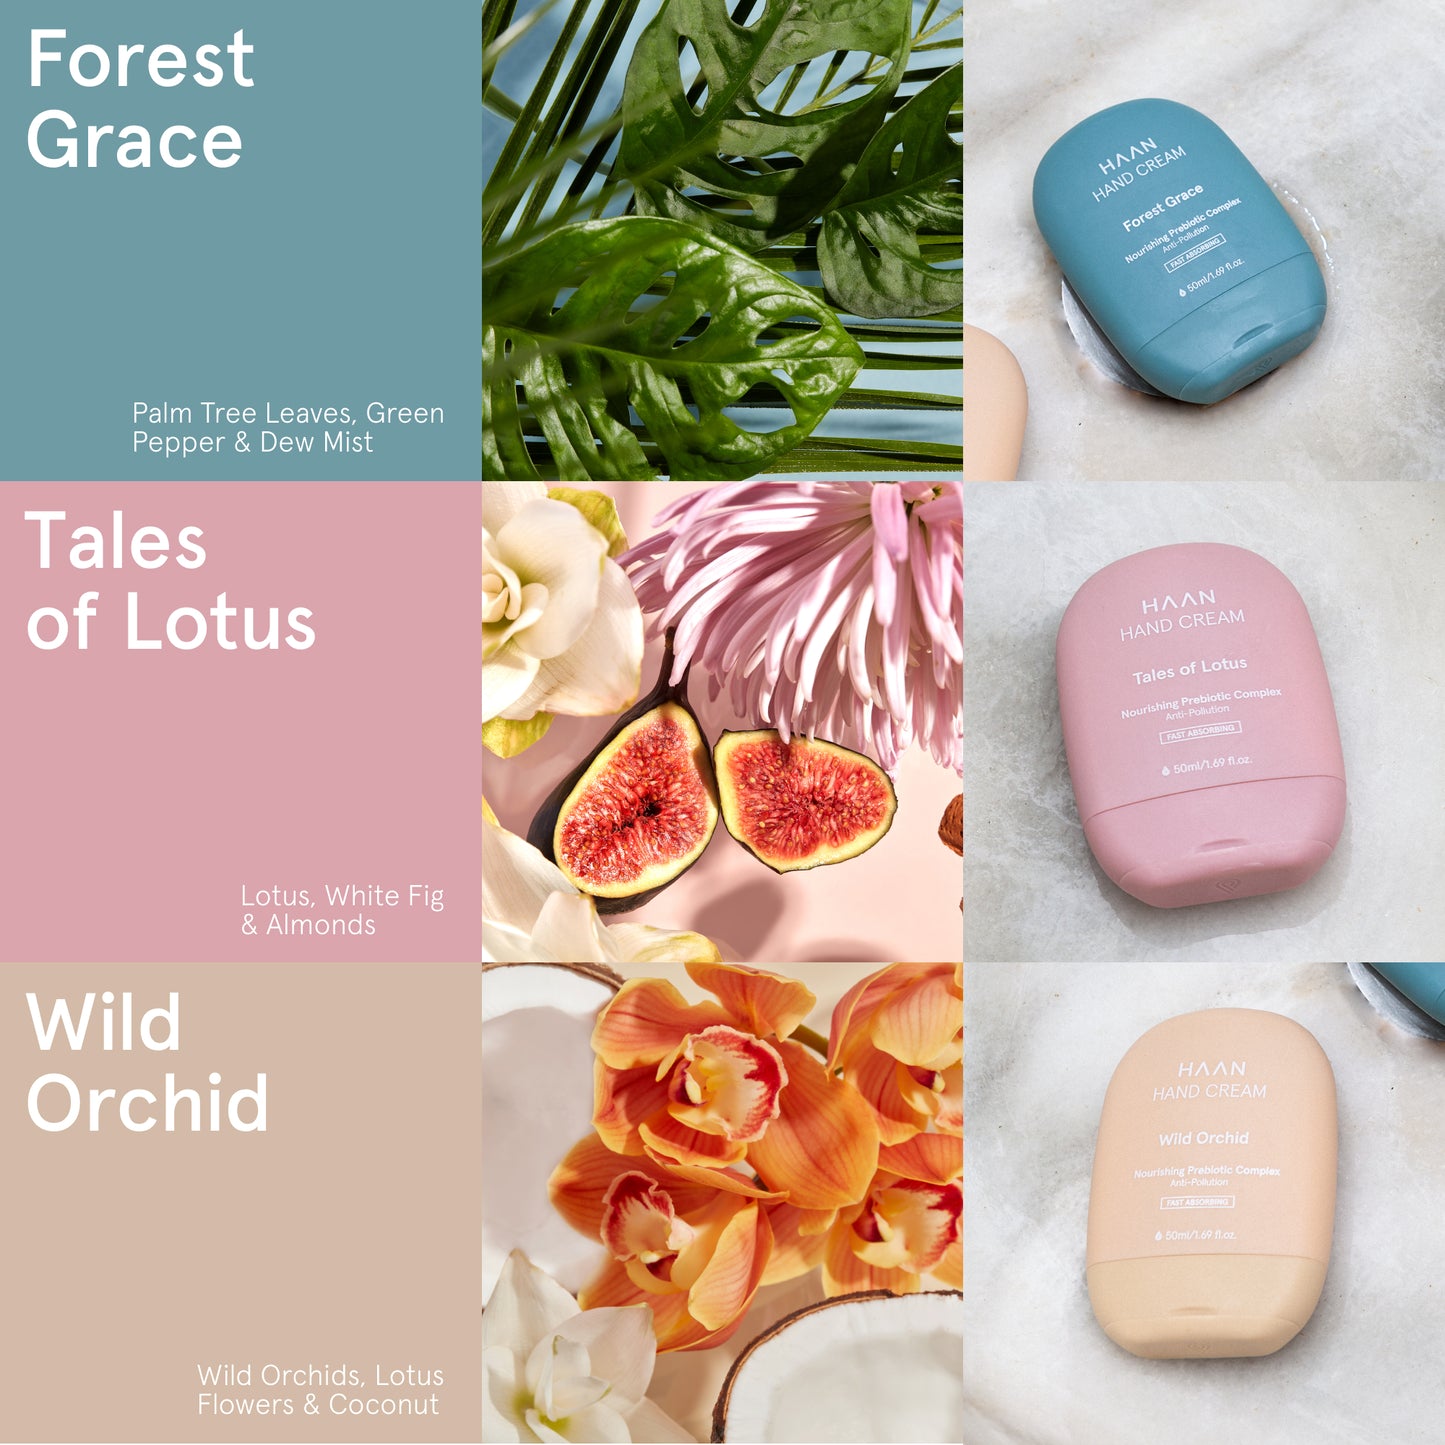 Hand Cream Tales of Lotus